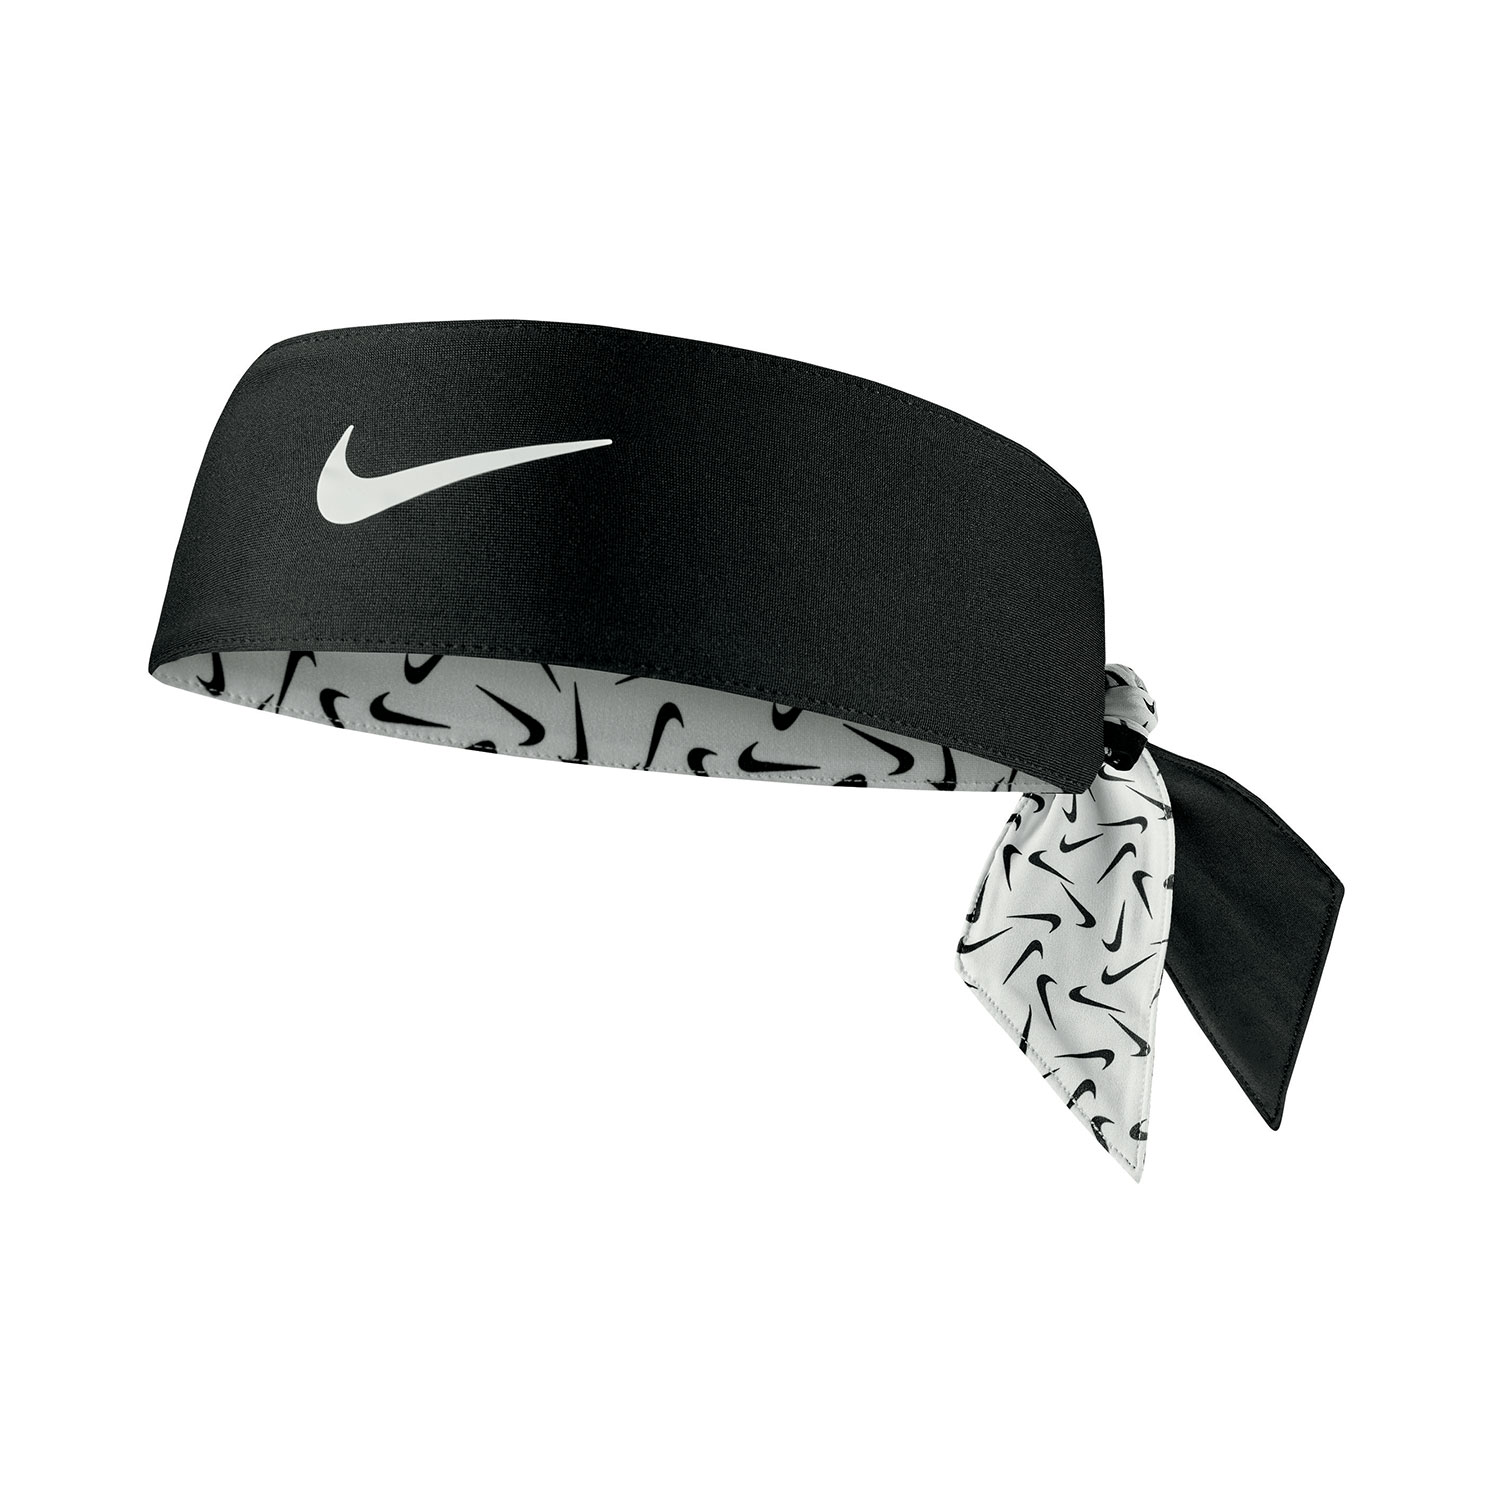 Nike Dri-FIT Printed 4.0 de Tenis - White/Black